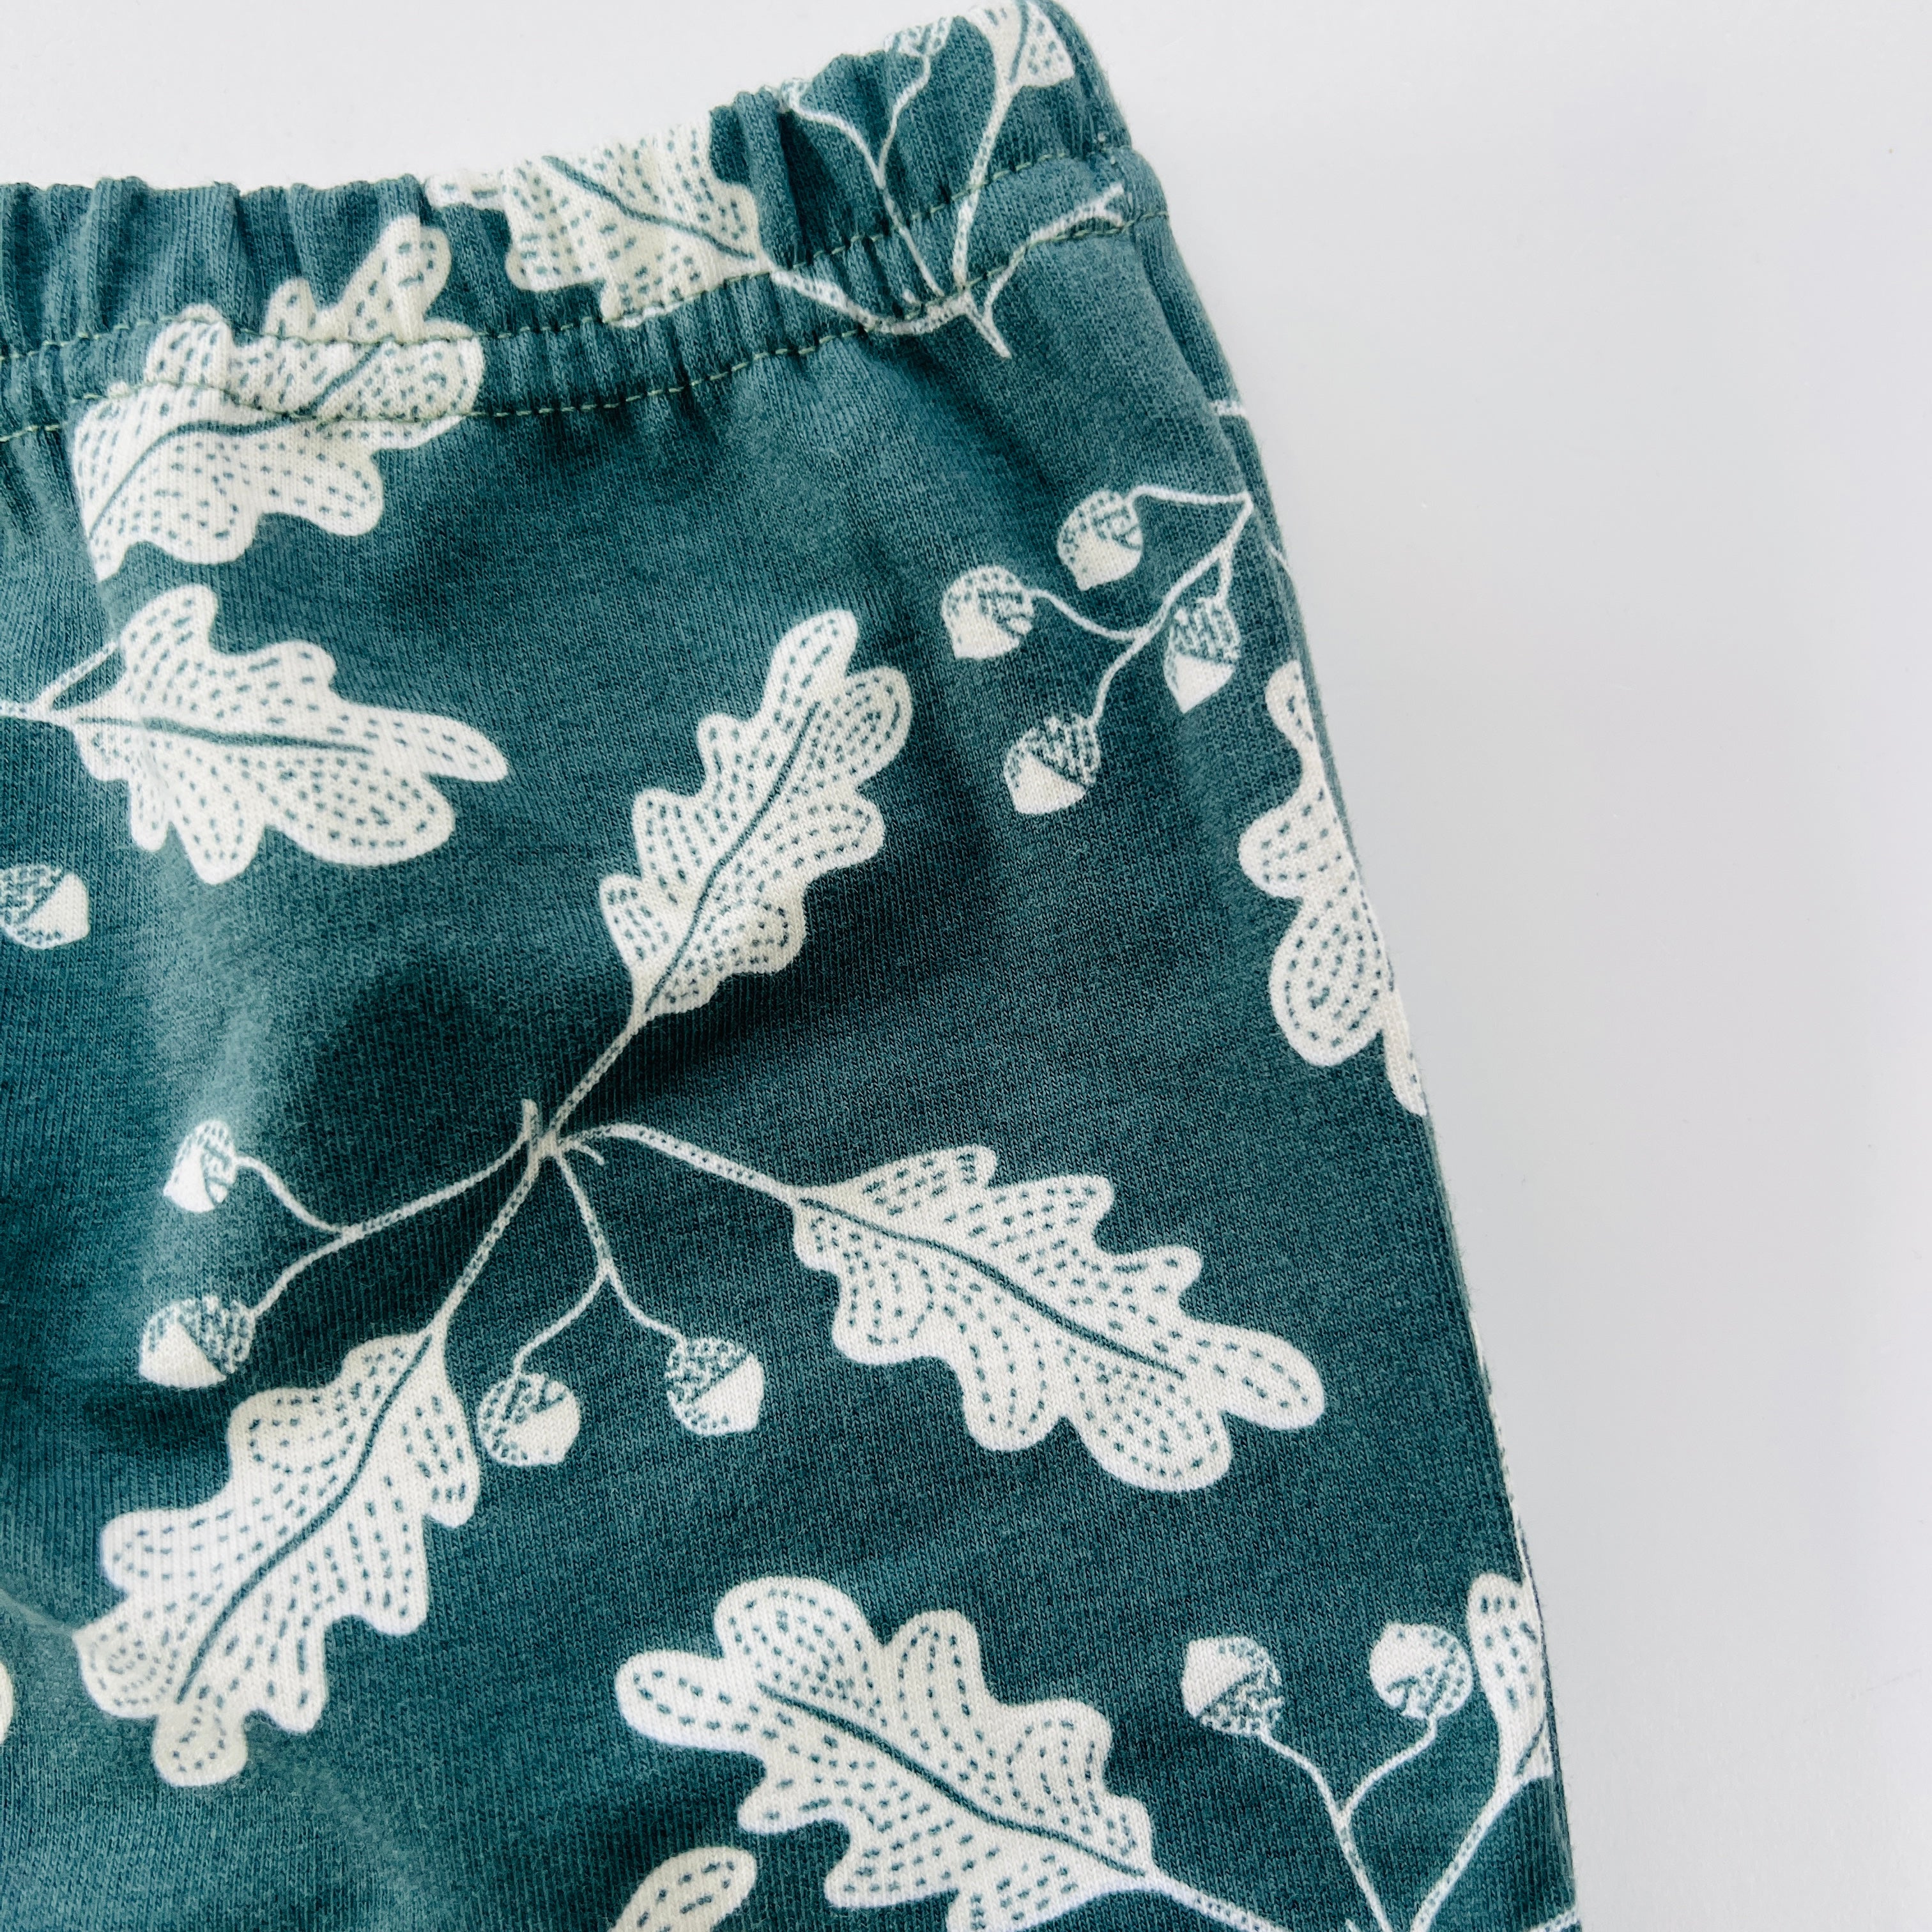 Eddie & Bee organic cotton leggings in Pine "Acorn Leaves" print. (Thicker Jersey Fabric)